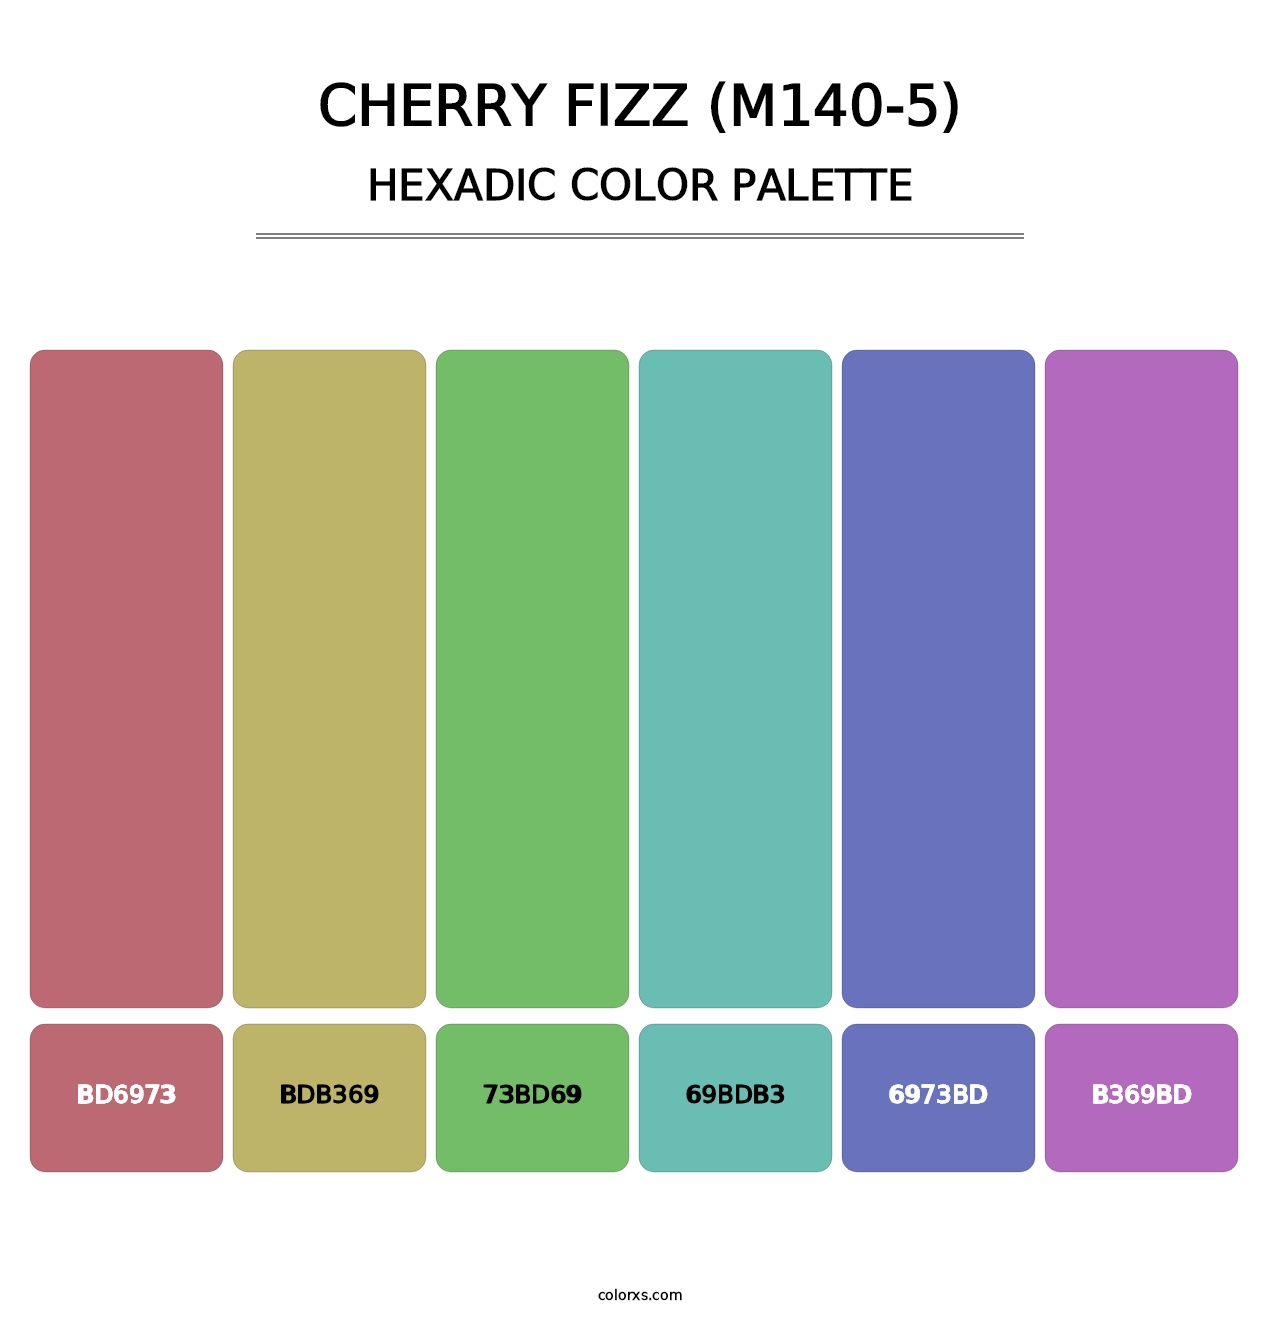 Cherry Fizz (M140-5) - Hexadic Color Palette